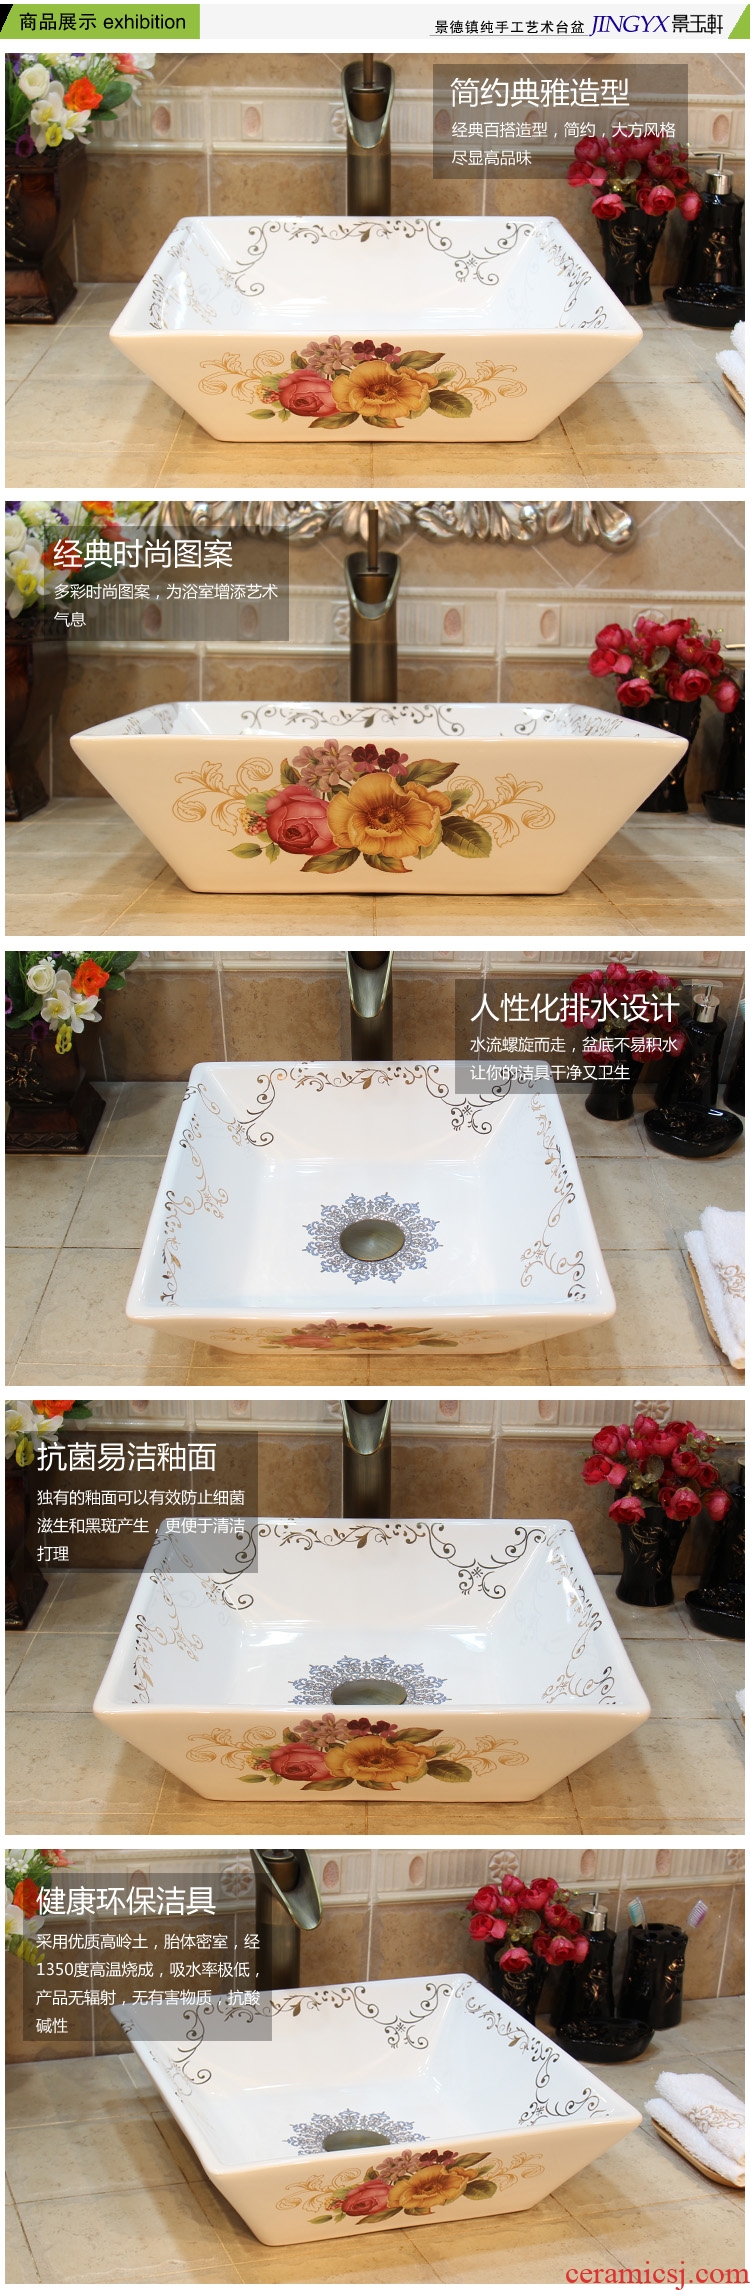 Jingdezhen ceramic lavatory basin stage art basin sink square rose sanitary ware